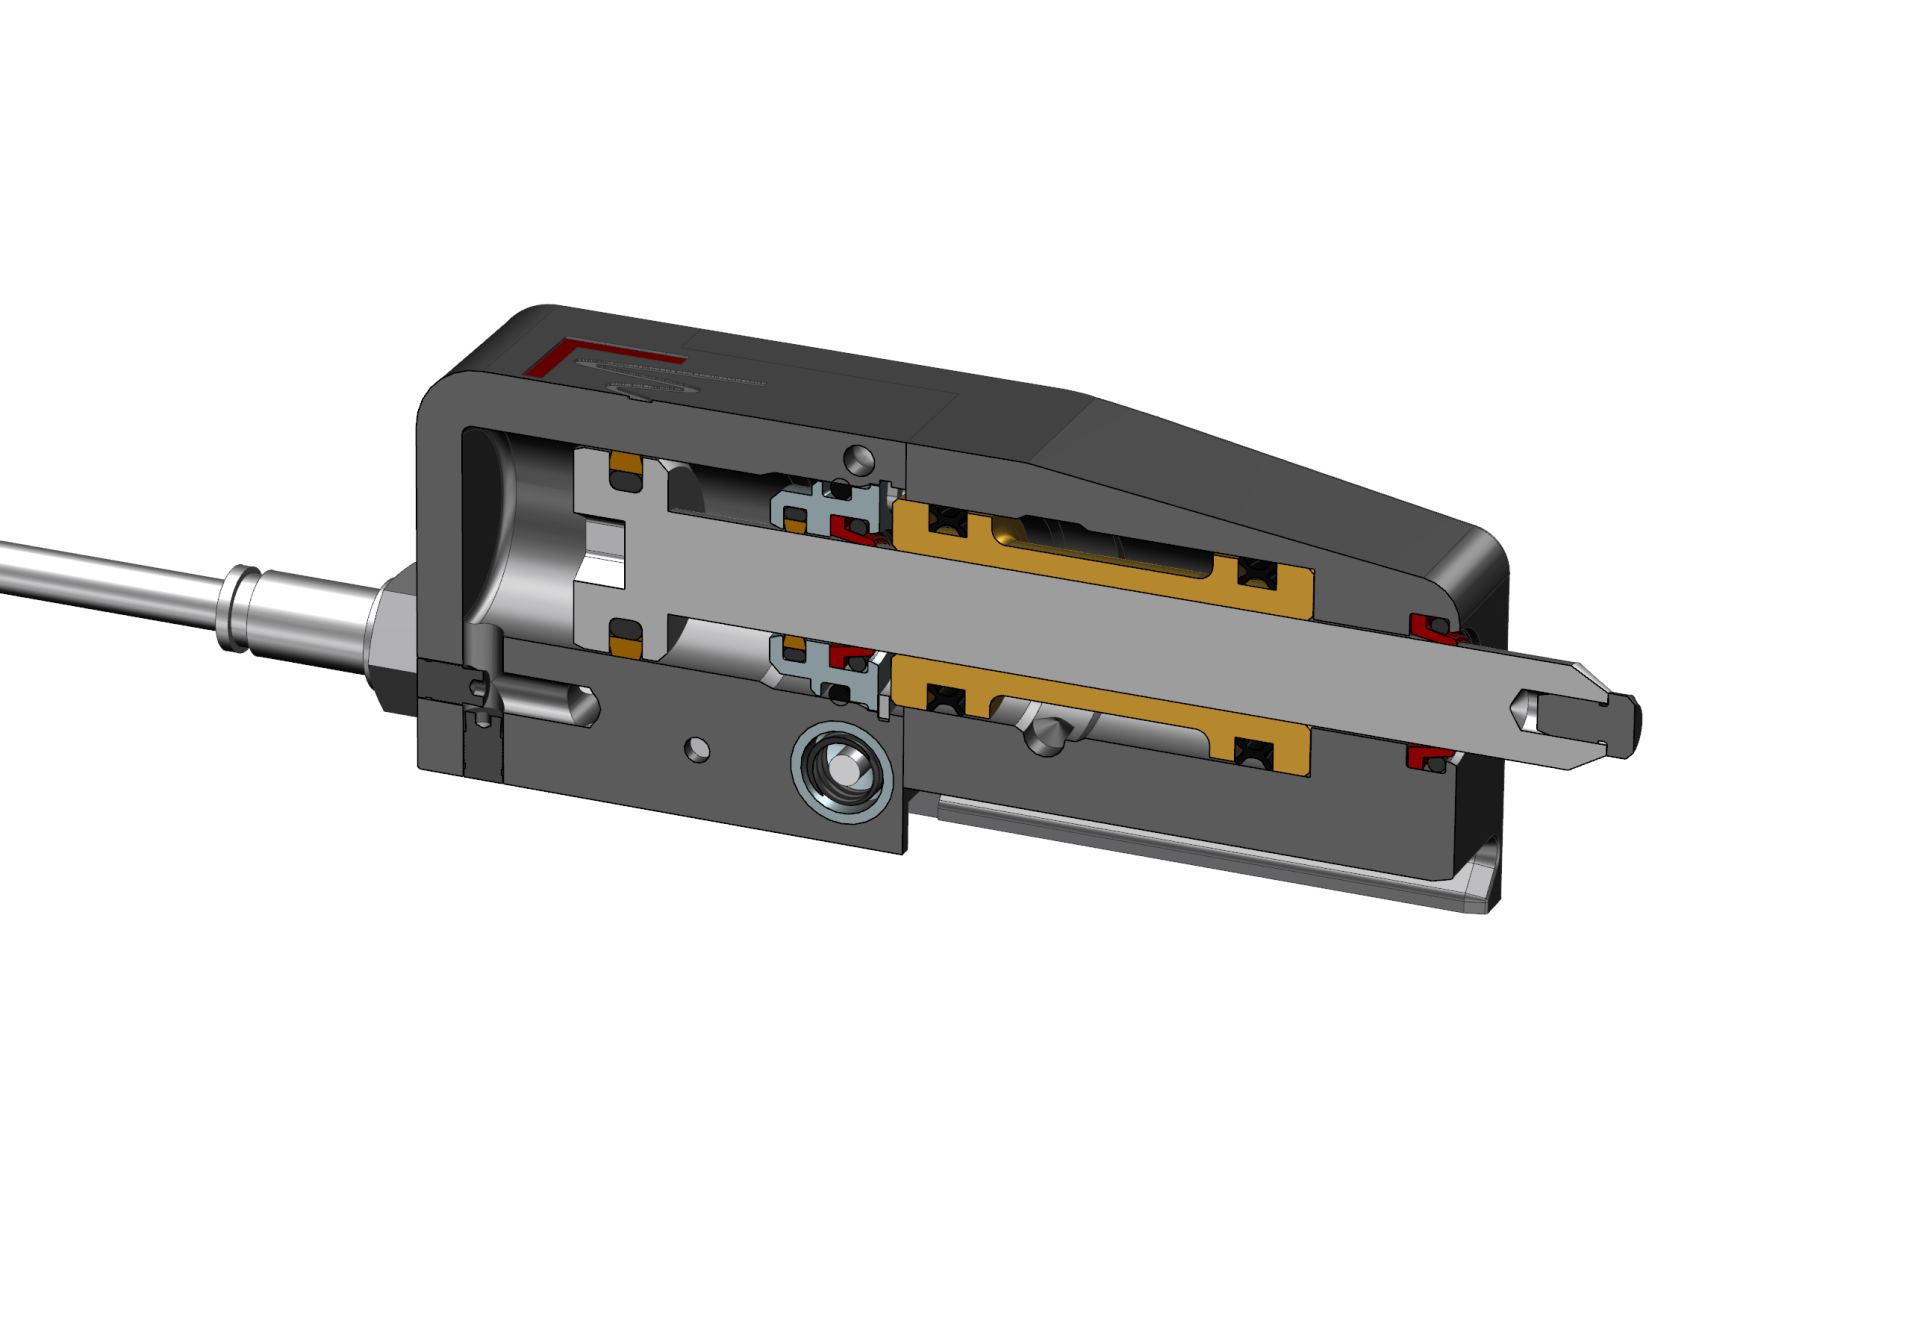 Hydraulic clamping module linear piston in cut view